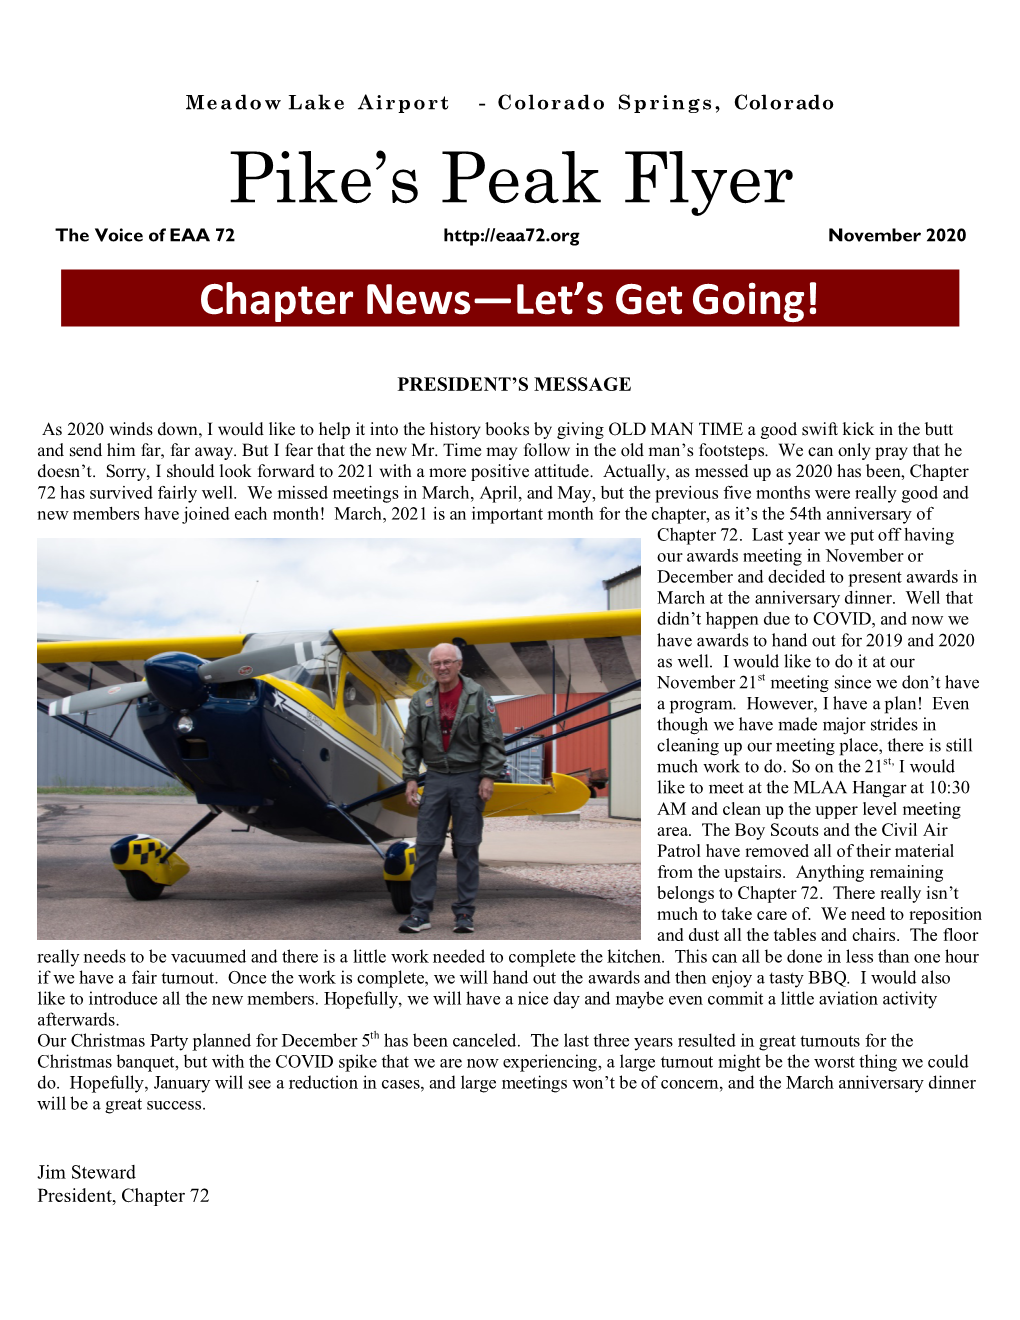 Pike's Peak Flyer